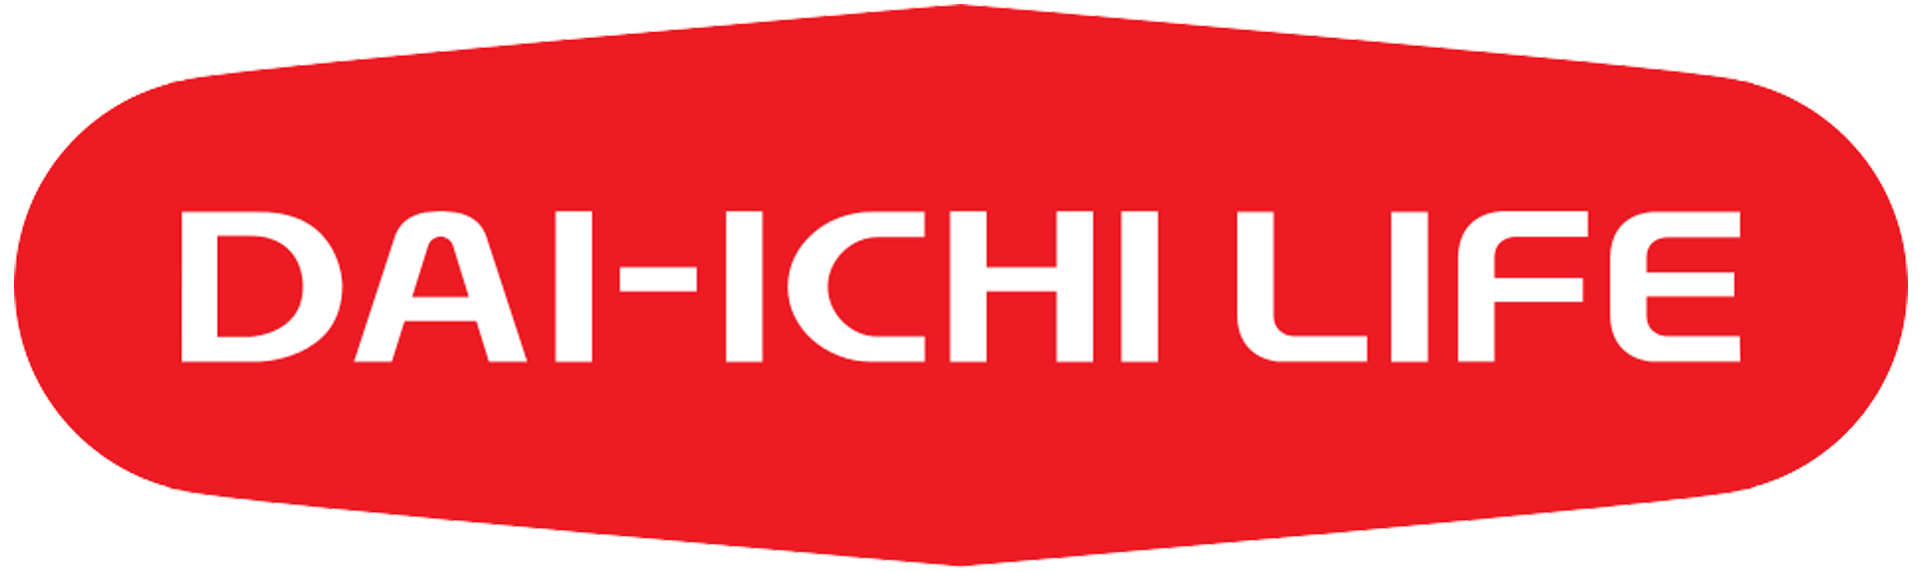 dai-ichi-logo-EN